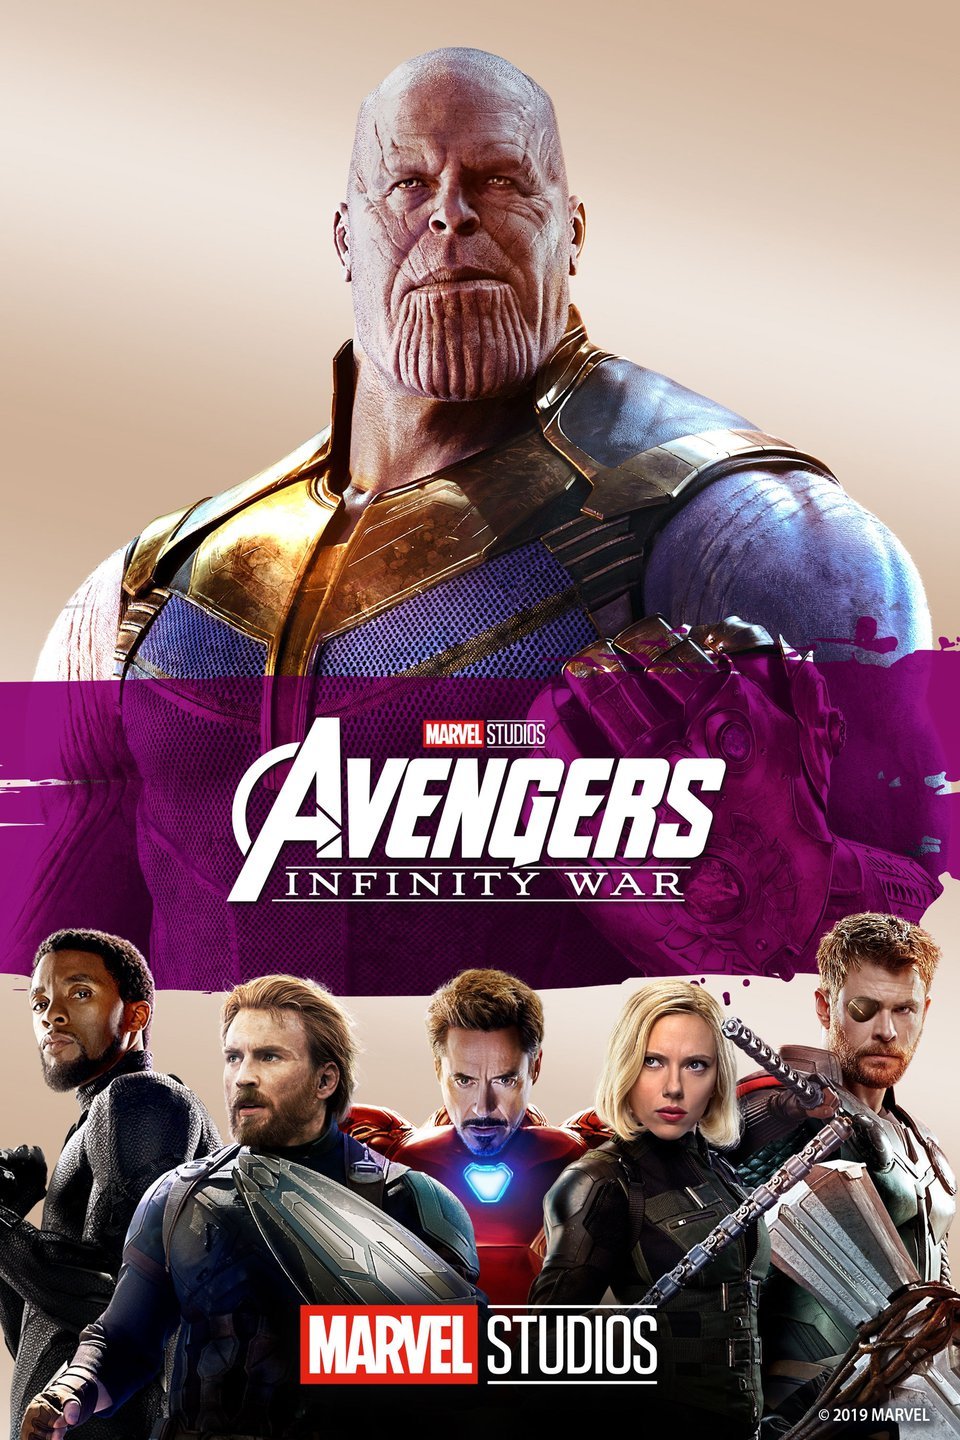 [MINI Super-HQ] Avengers: Infinity War (2018) มหาสงครามล้างจักรวาล [1080p] [พากย์ไทย 5.1 + เสียงอังกฤษ DTS] [บรรยายไทย + อังกฤษ] [เสียงไทย + ซับไทย]